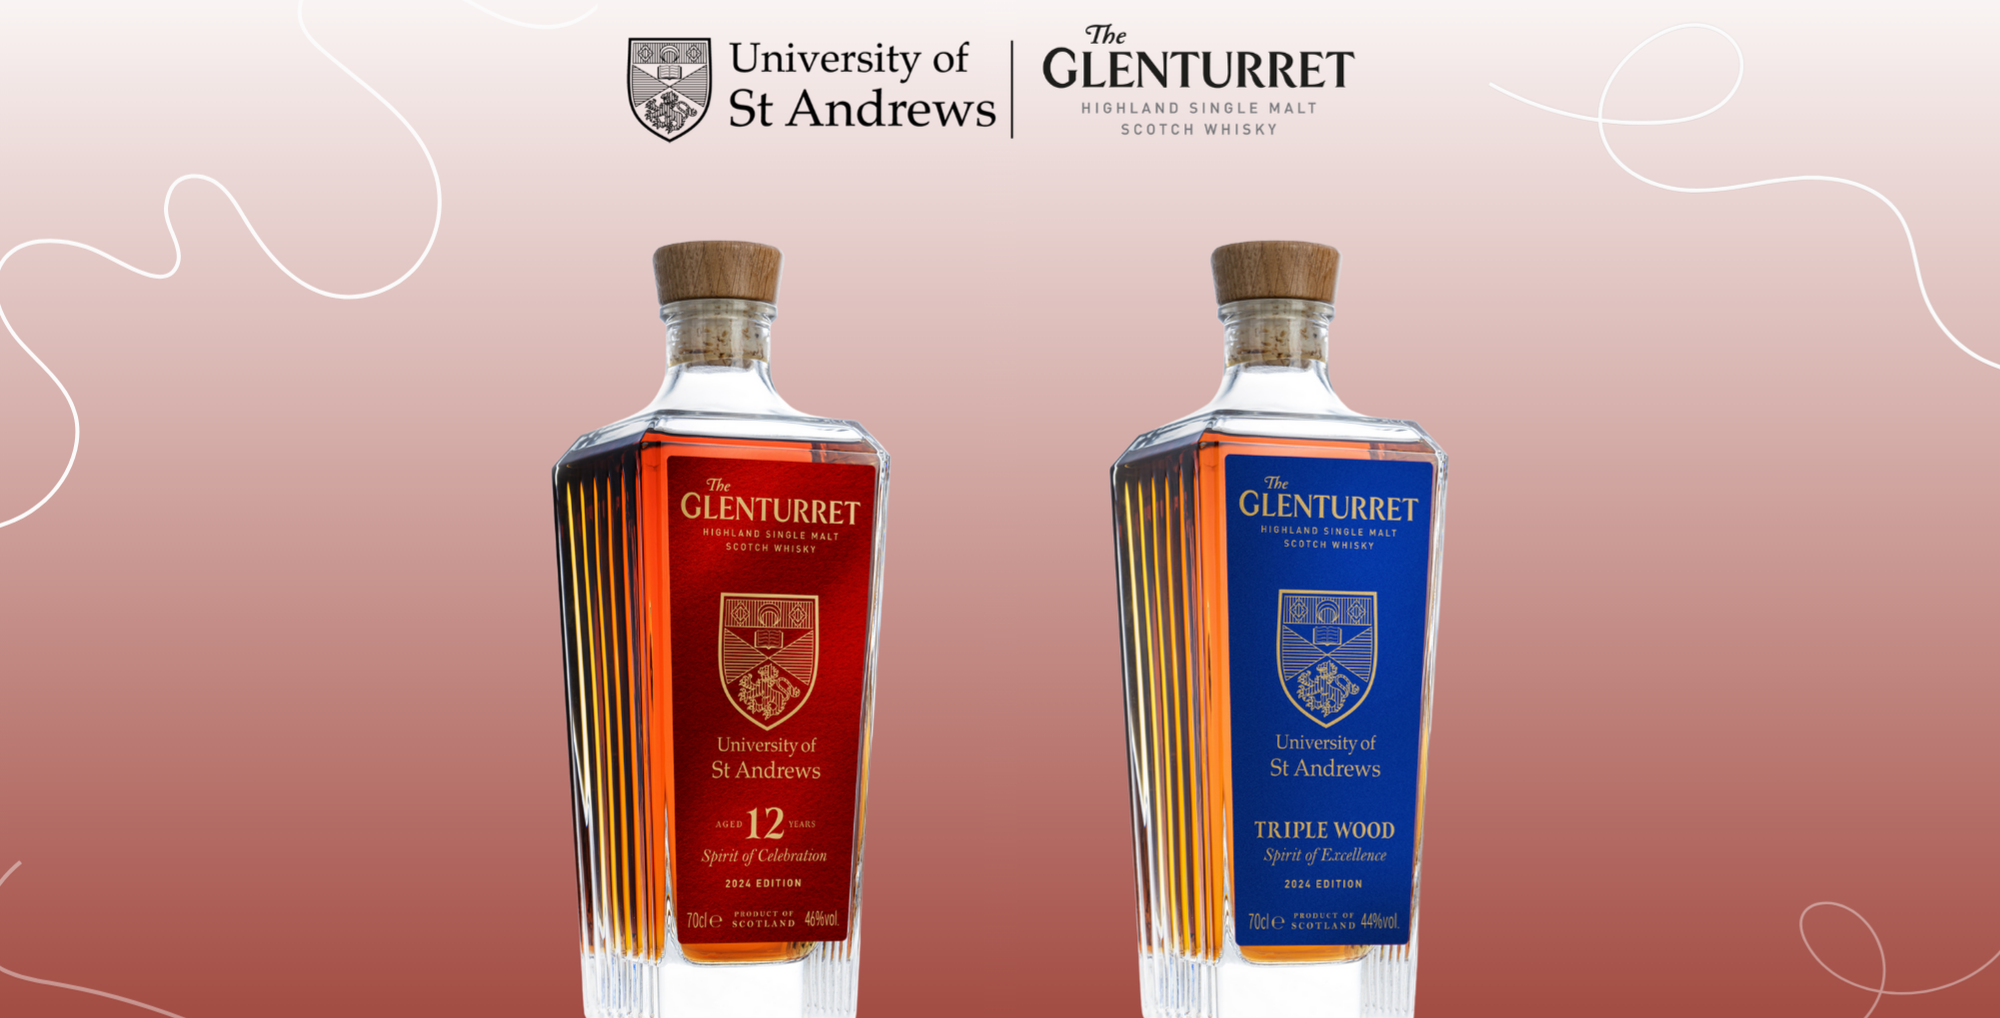 University of St Andrews whisky advert